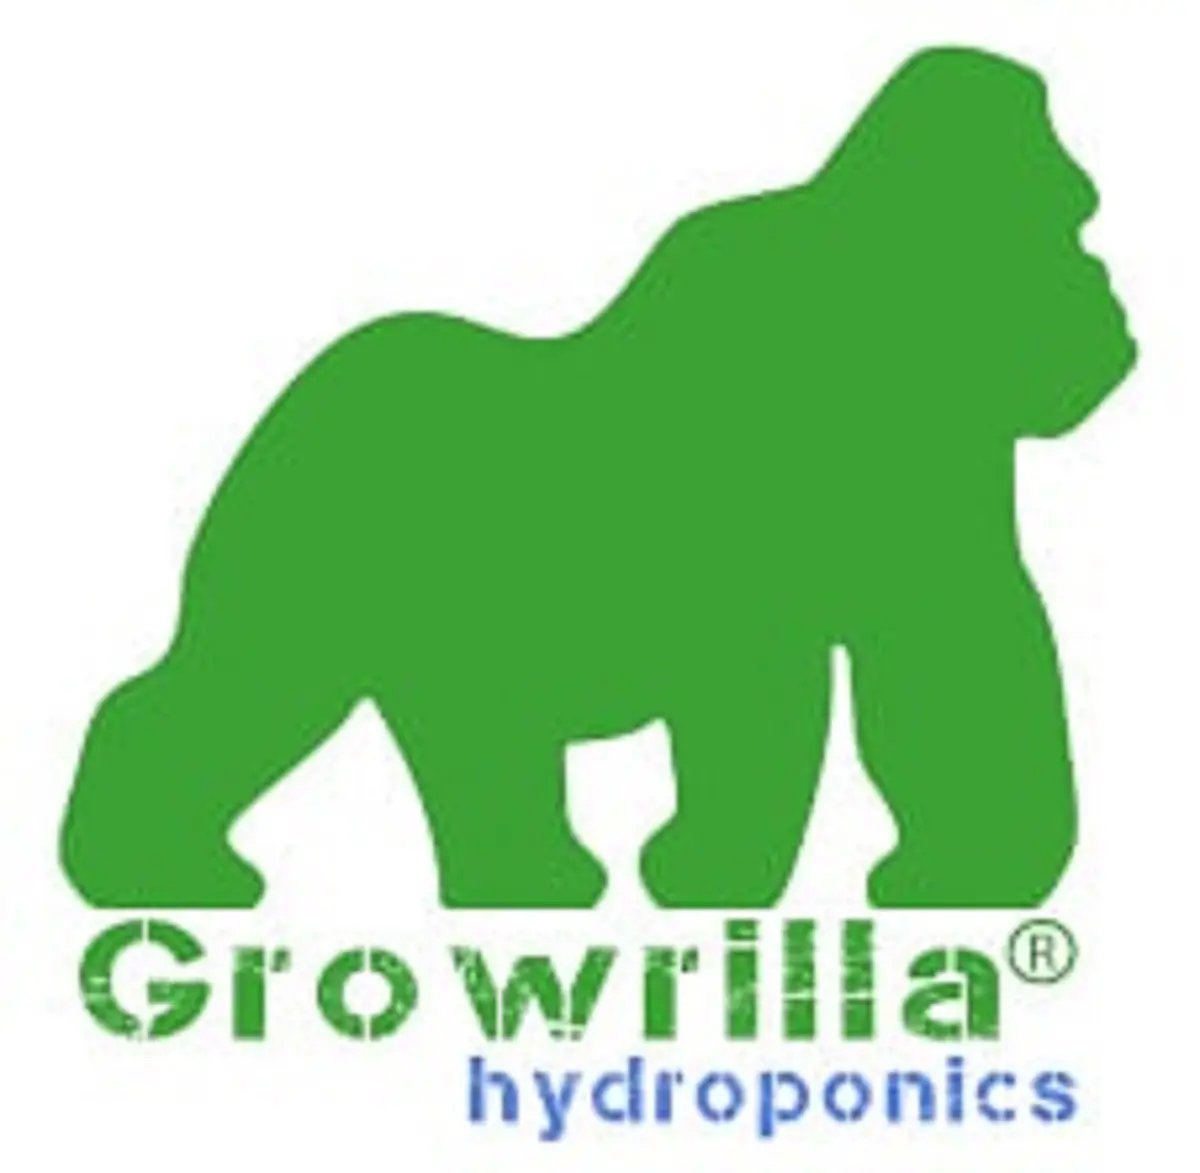 Notre kit de culture en hydroponie Growrilla RDWC 12 